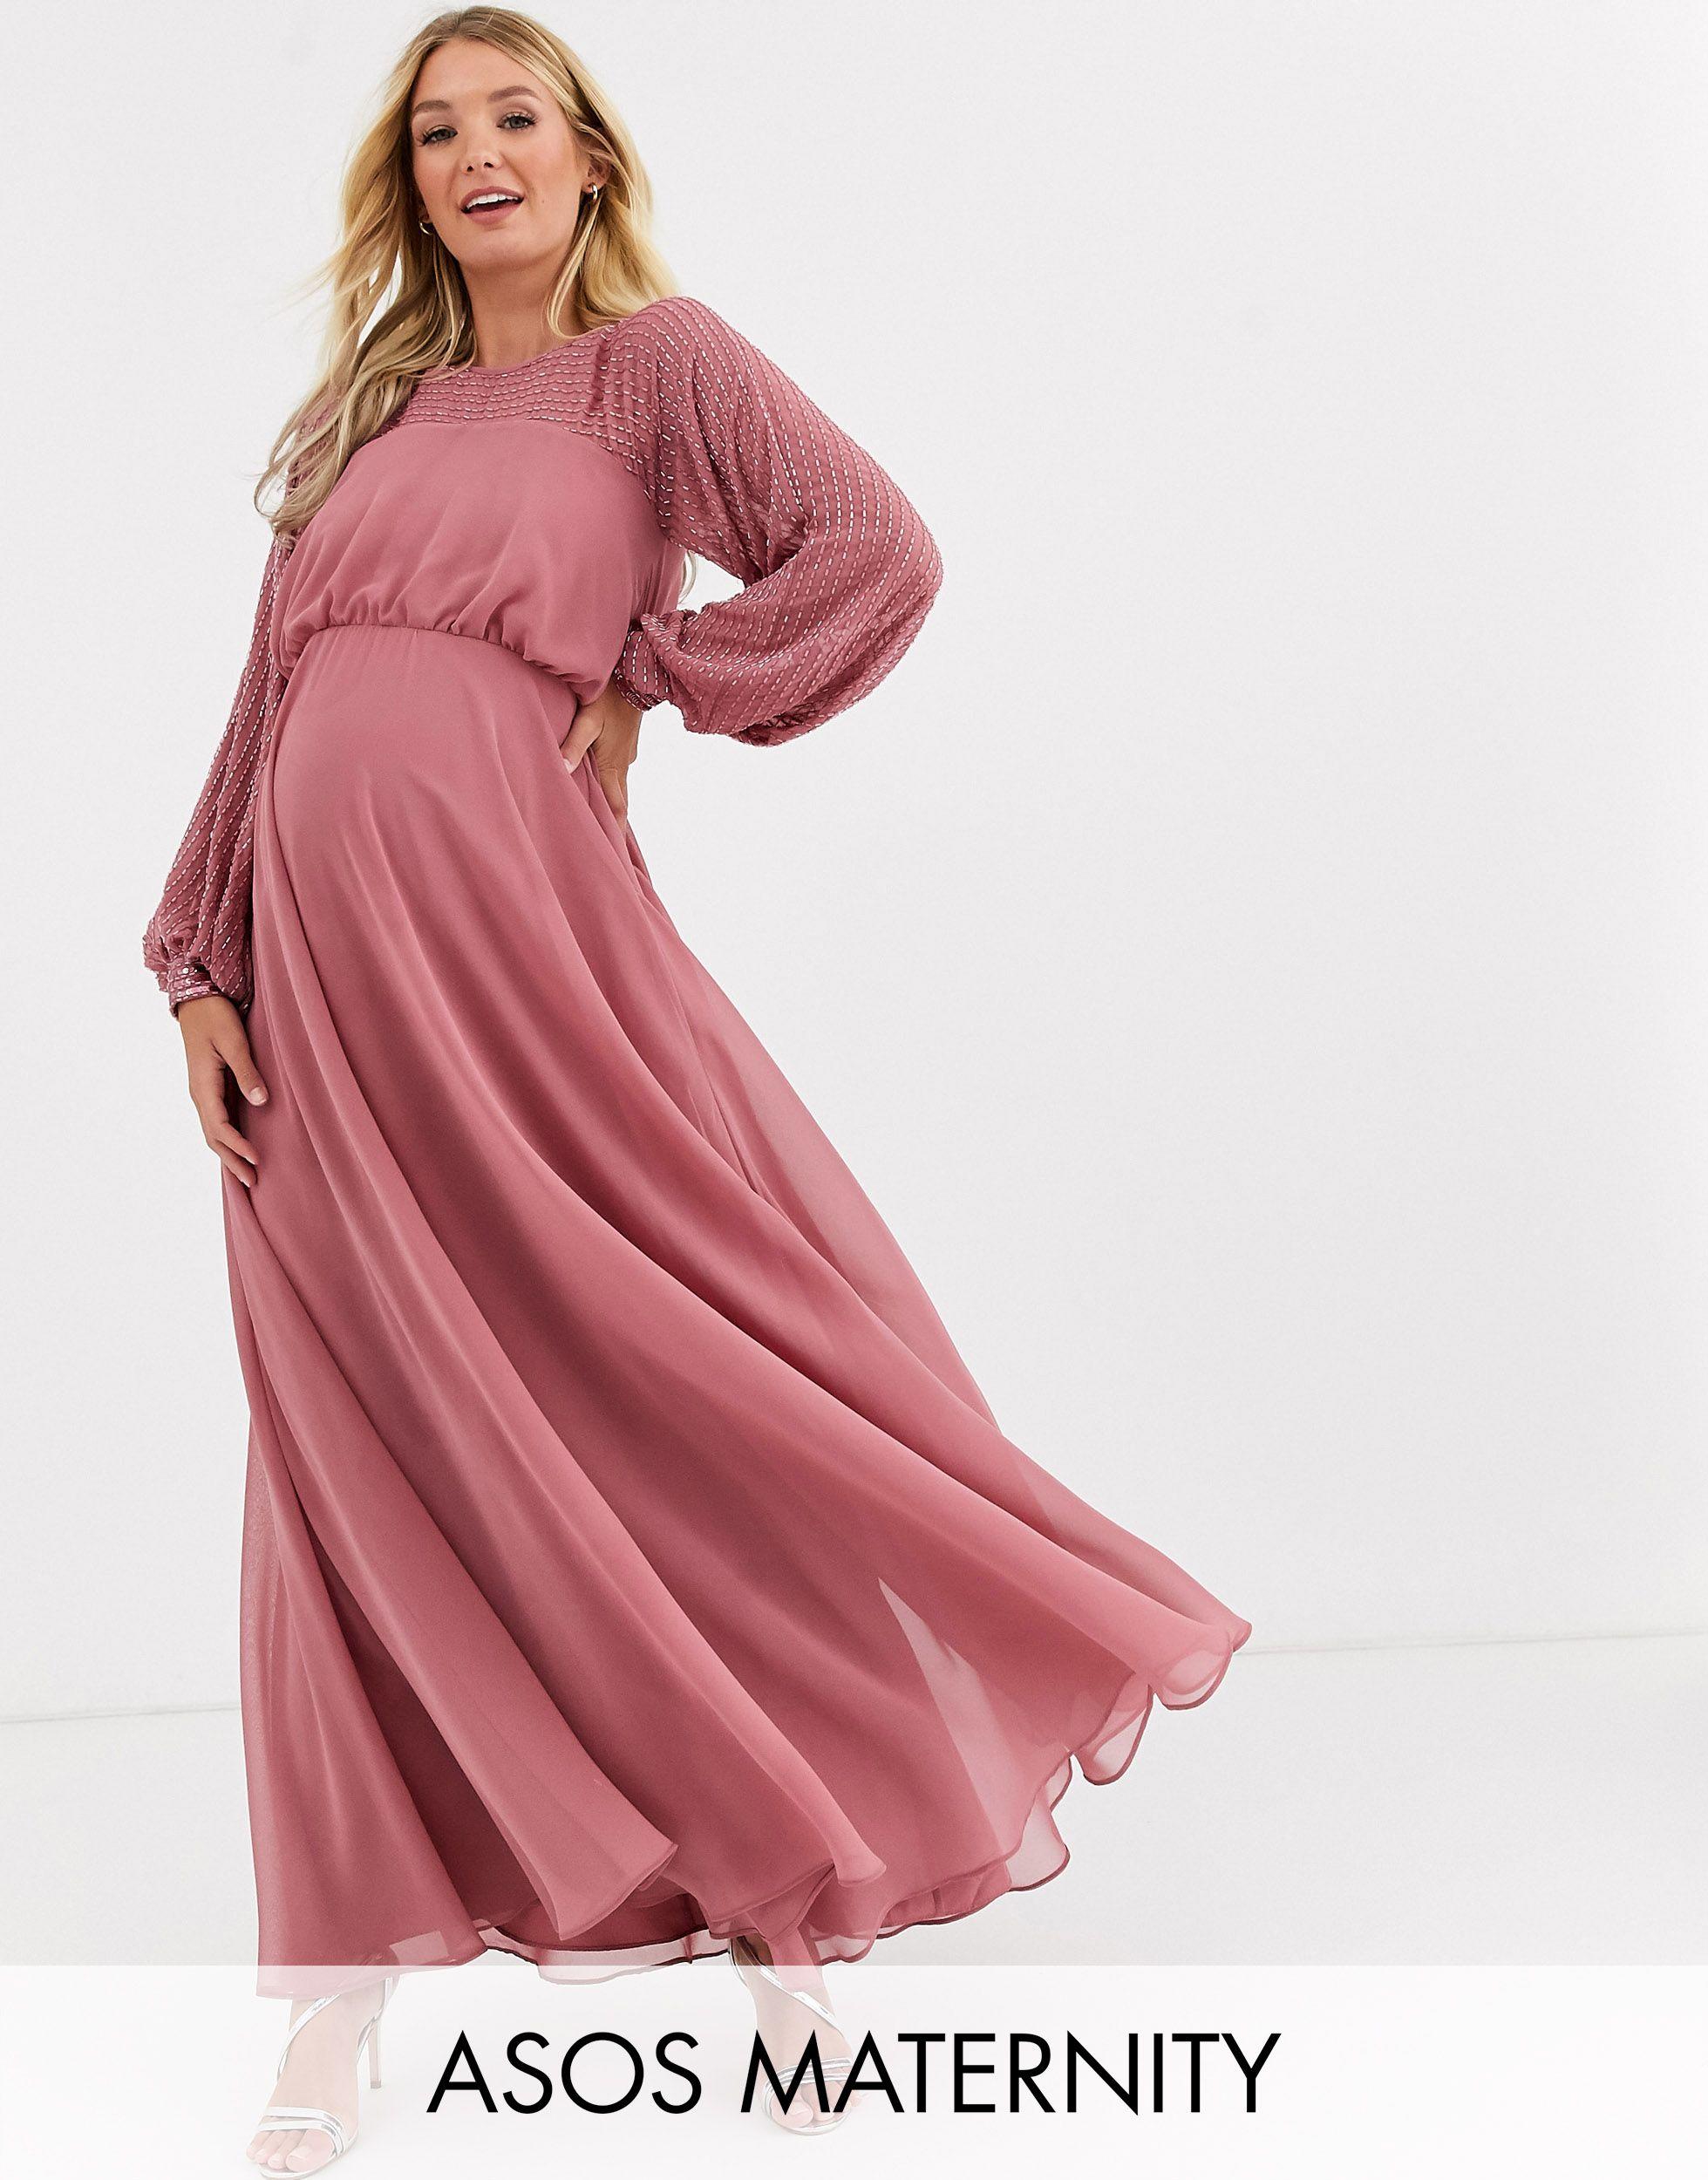 https://cdna.lystit.com/photos/asos/8b4a53fd/asos-Pink-Asos-Design-Maternity-Maxi-Dress-With-Linear-Yolk-Embellishment.jpeg